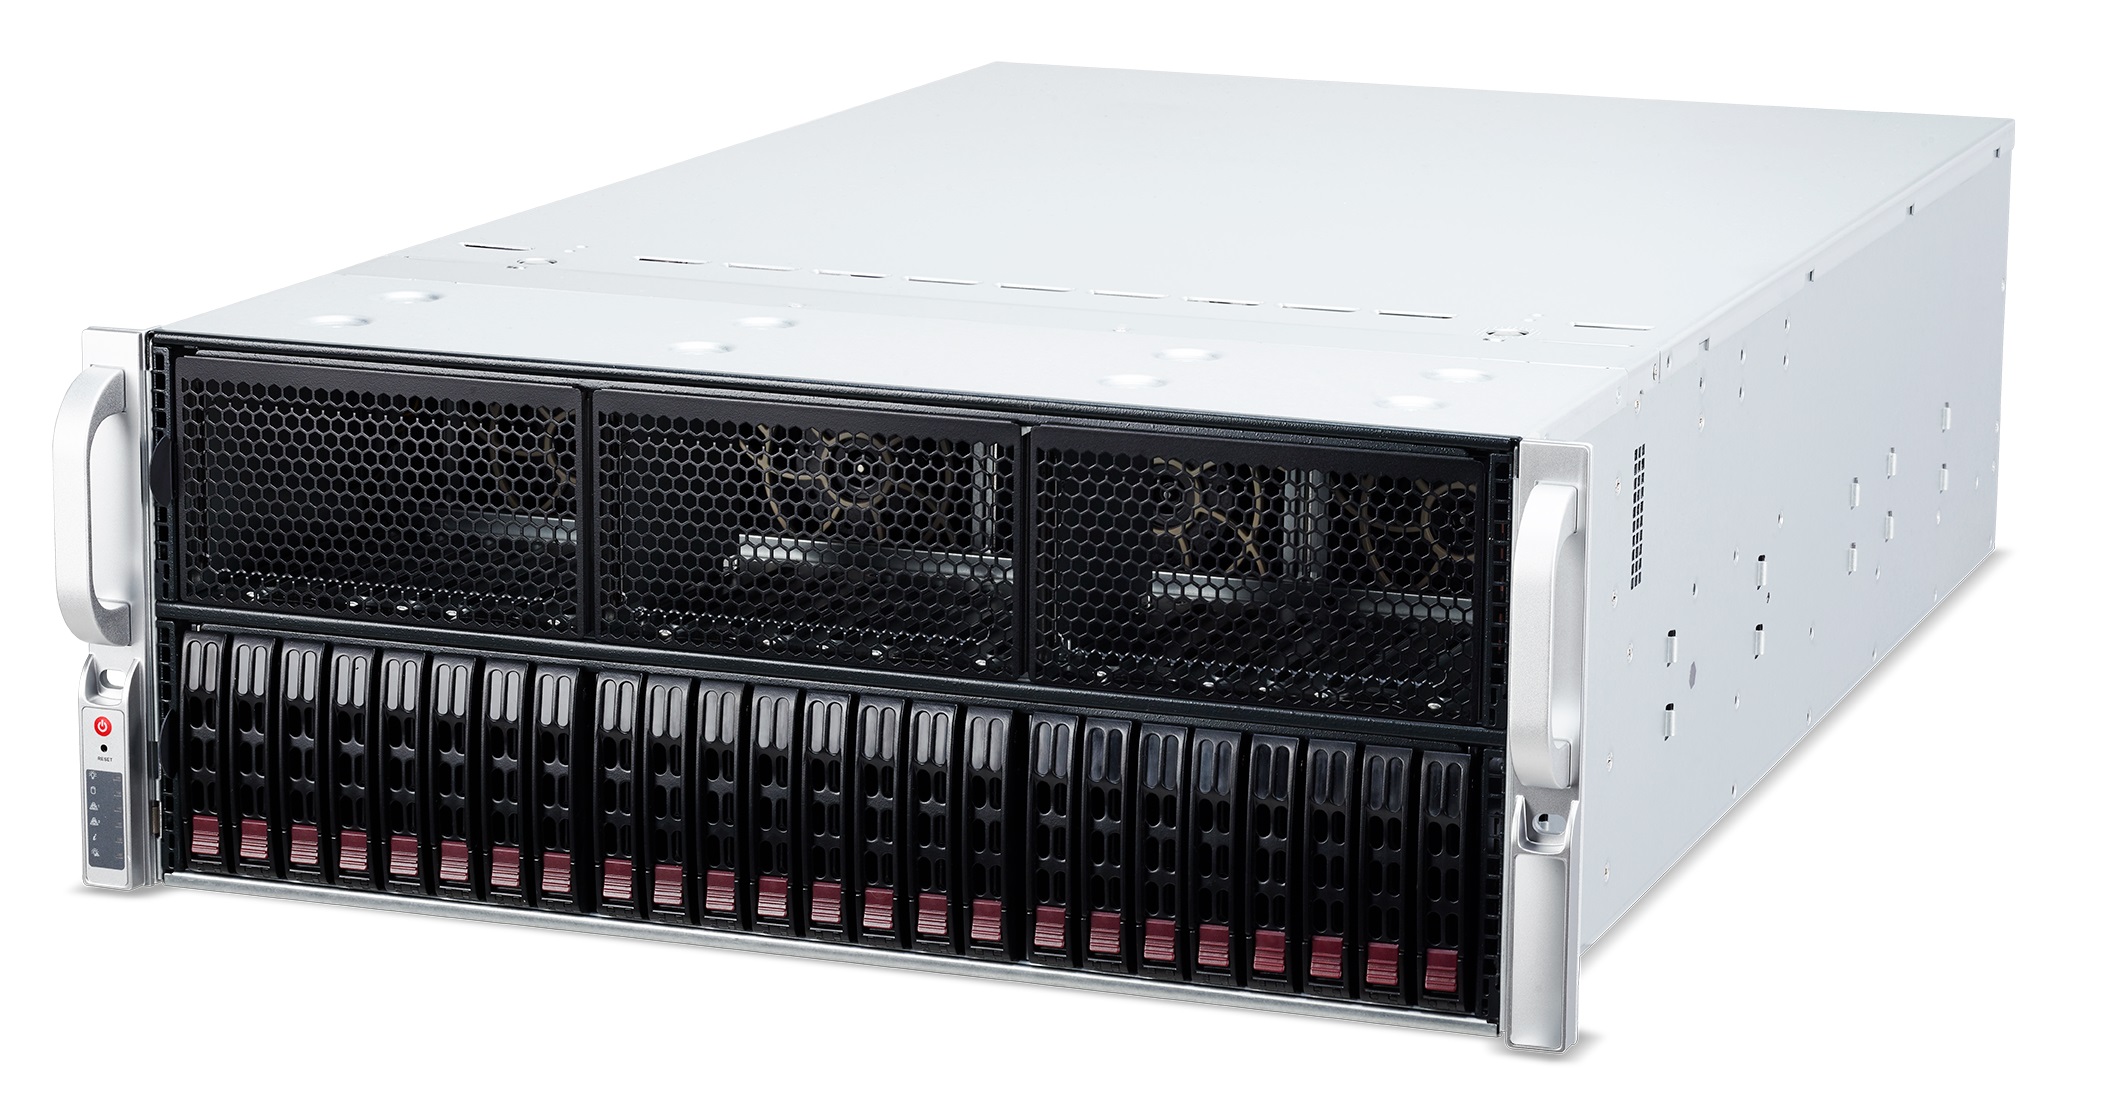 Altos Computing เปิดตัวเซิฟเวอร์ Altos BrainSphereTM R685 F5 ขับเคลื่อนด้วยพลัง NVIDIA RTX A6000 GPU